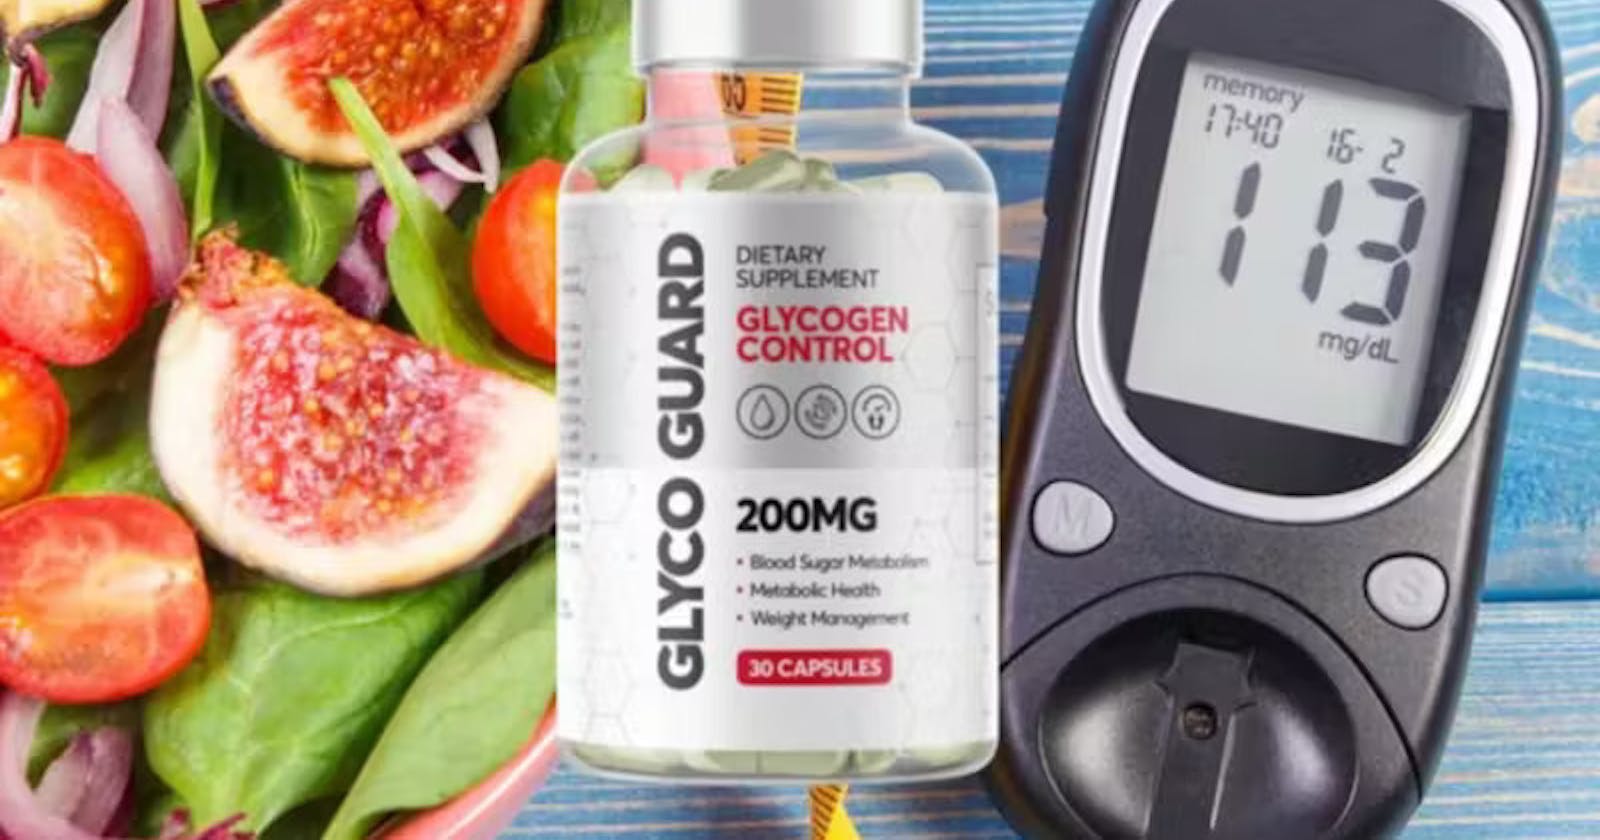 Glycogen Control Chemist Warehouse: The Ultimate Solution for Managing Blood Sugar Levels